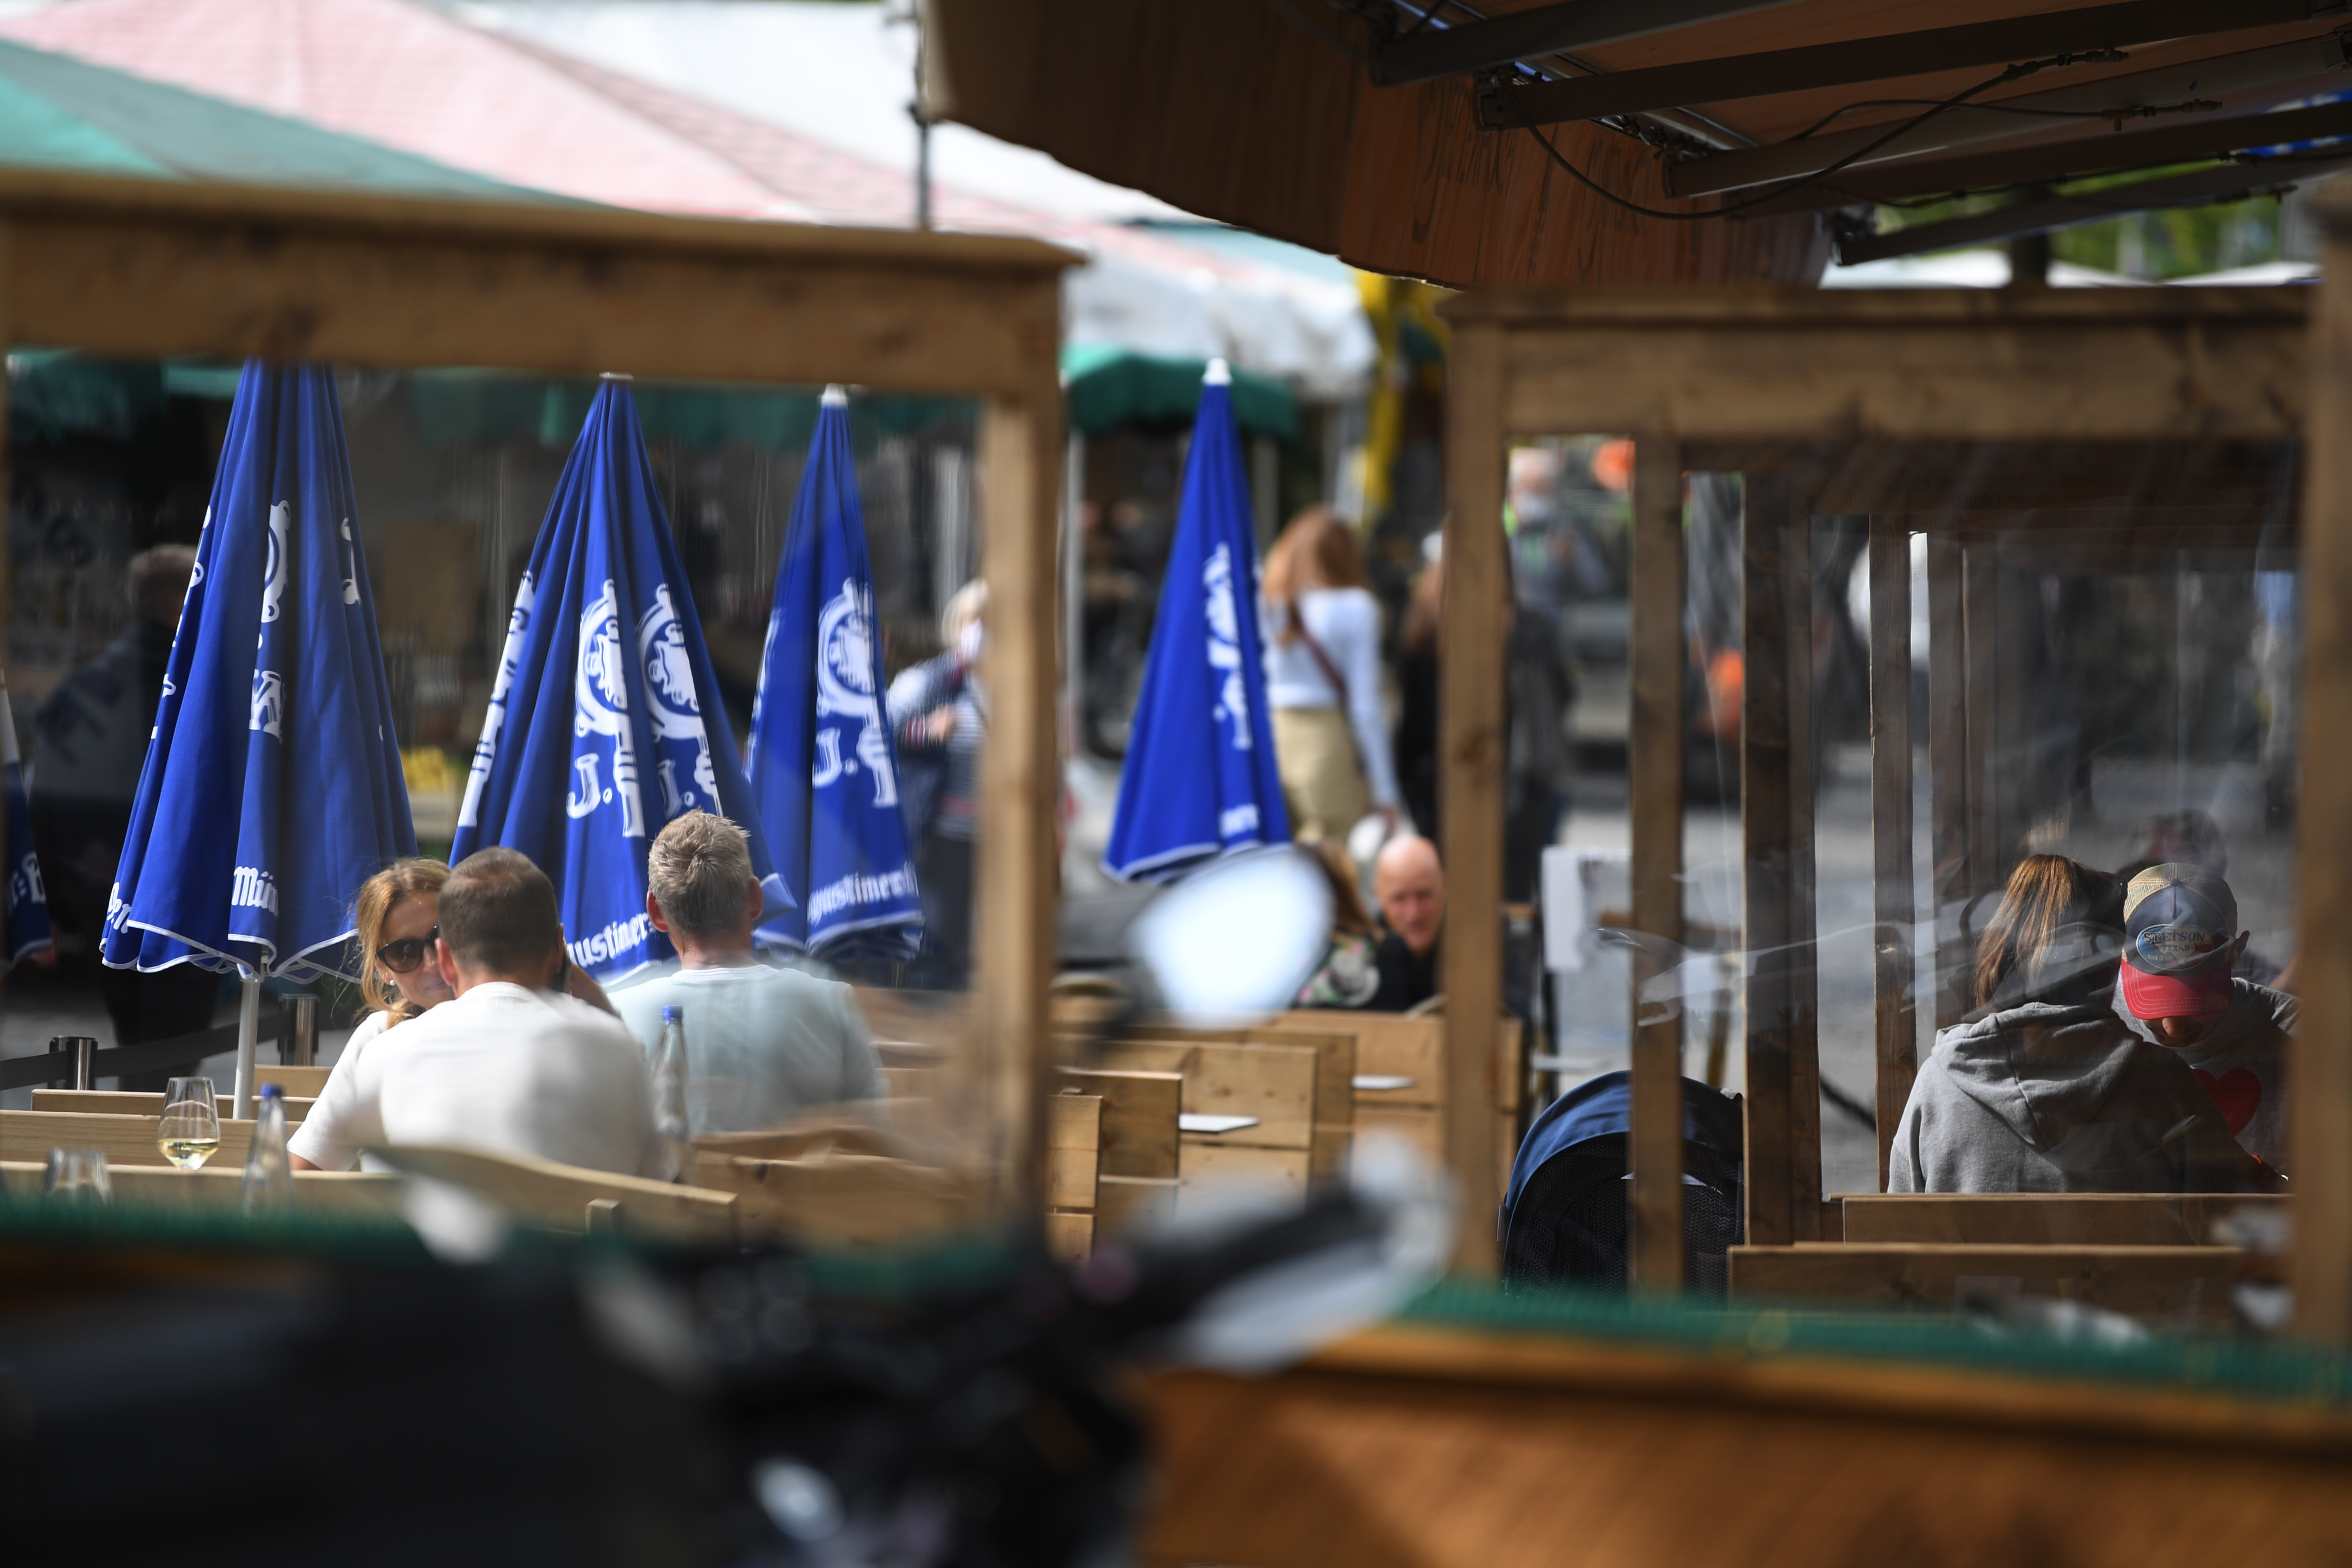 Partition screens&nbsp;divide customers&nbsp;on an outdoor restaurant terrace in Munich, on Sept. 24.